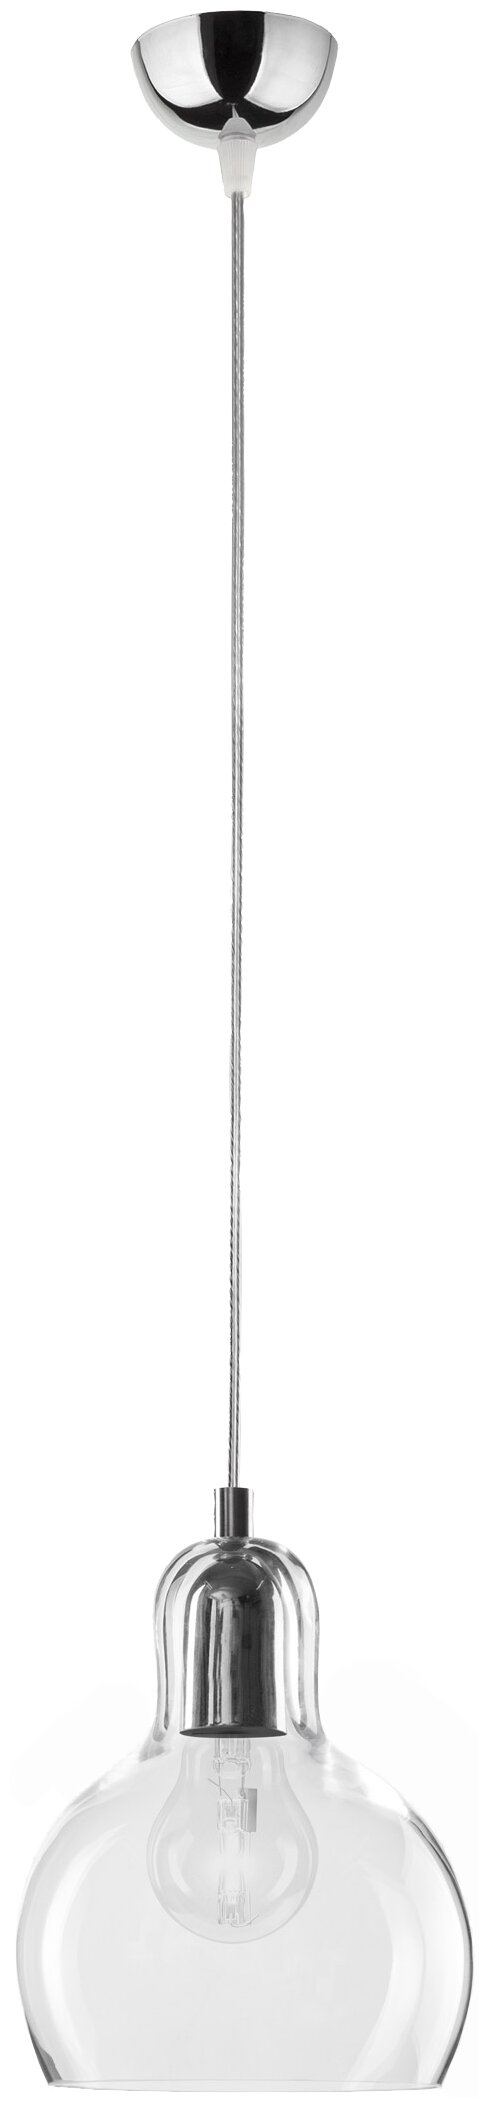 Светильник TK Lighting Mango 600, E27, 60 Вт, кол-во ламп: 1 шт., цвет: хром